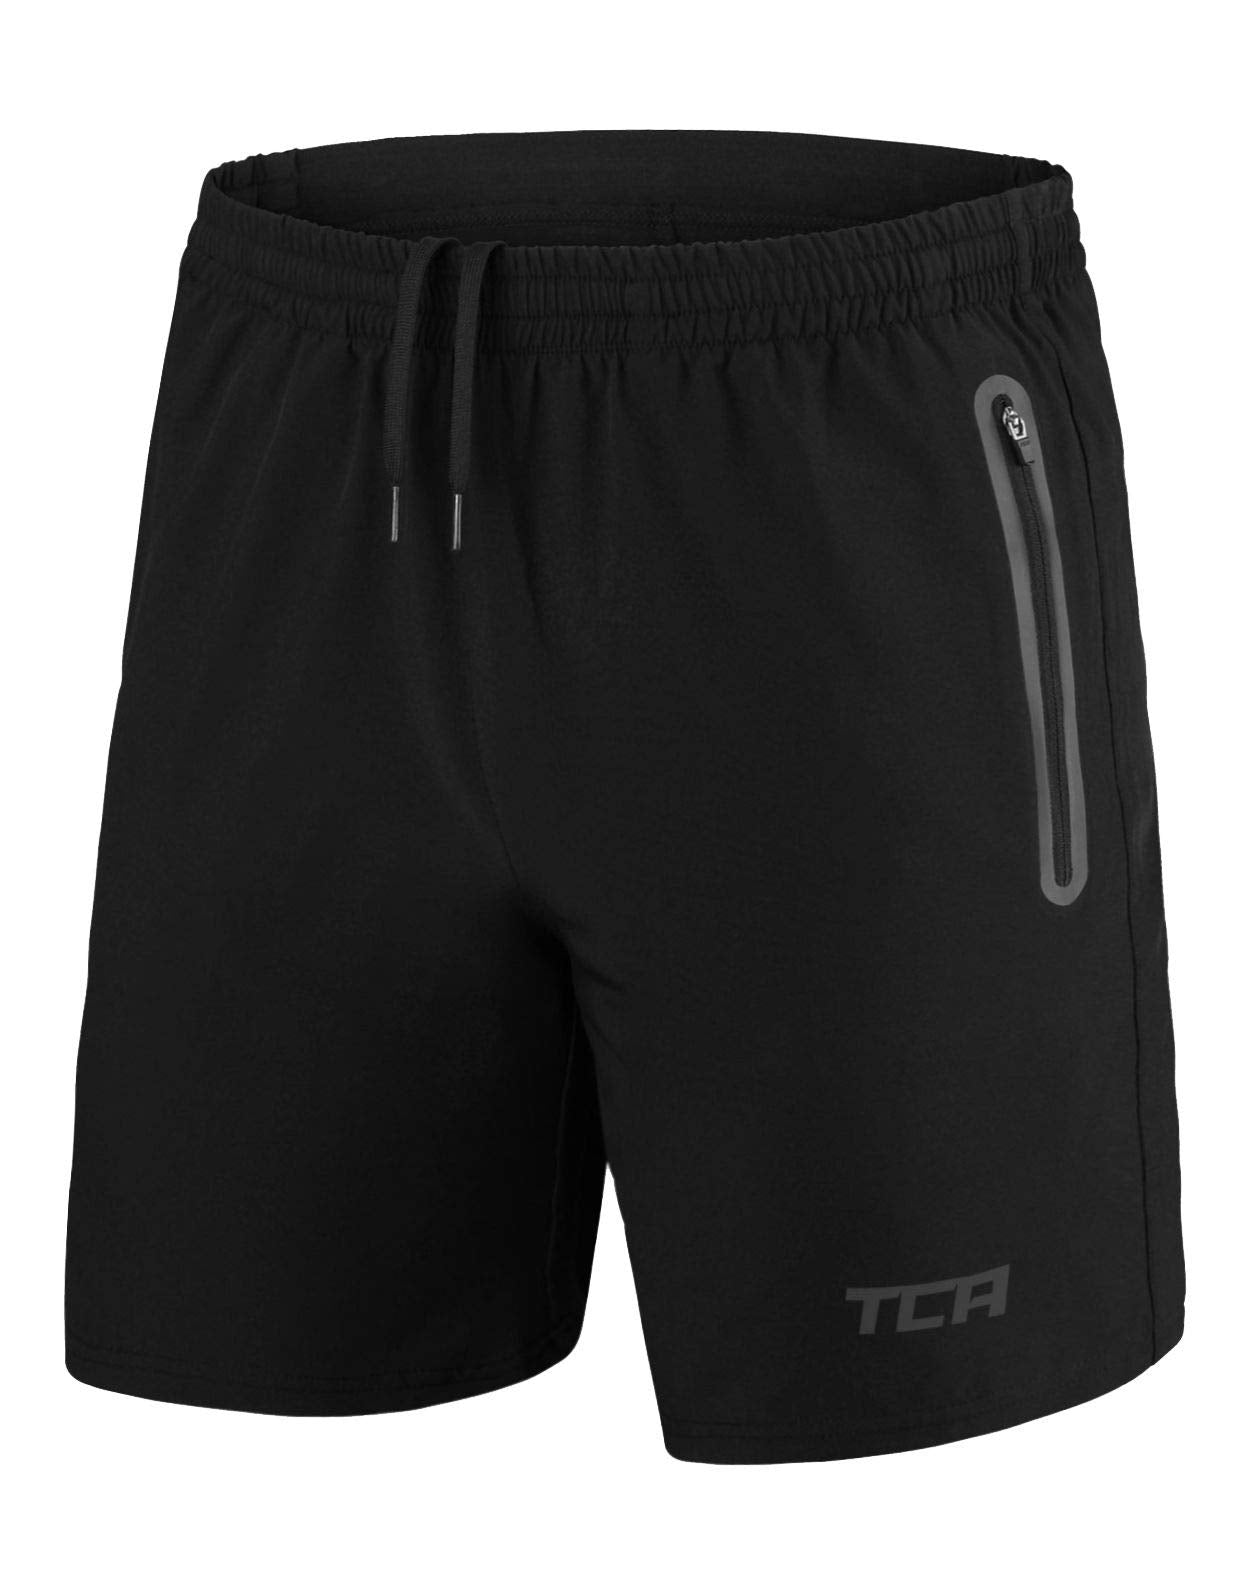 TCA Men's Elite Tech Lightweight Running or Gym Training Shorts with Zip Pockets